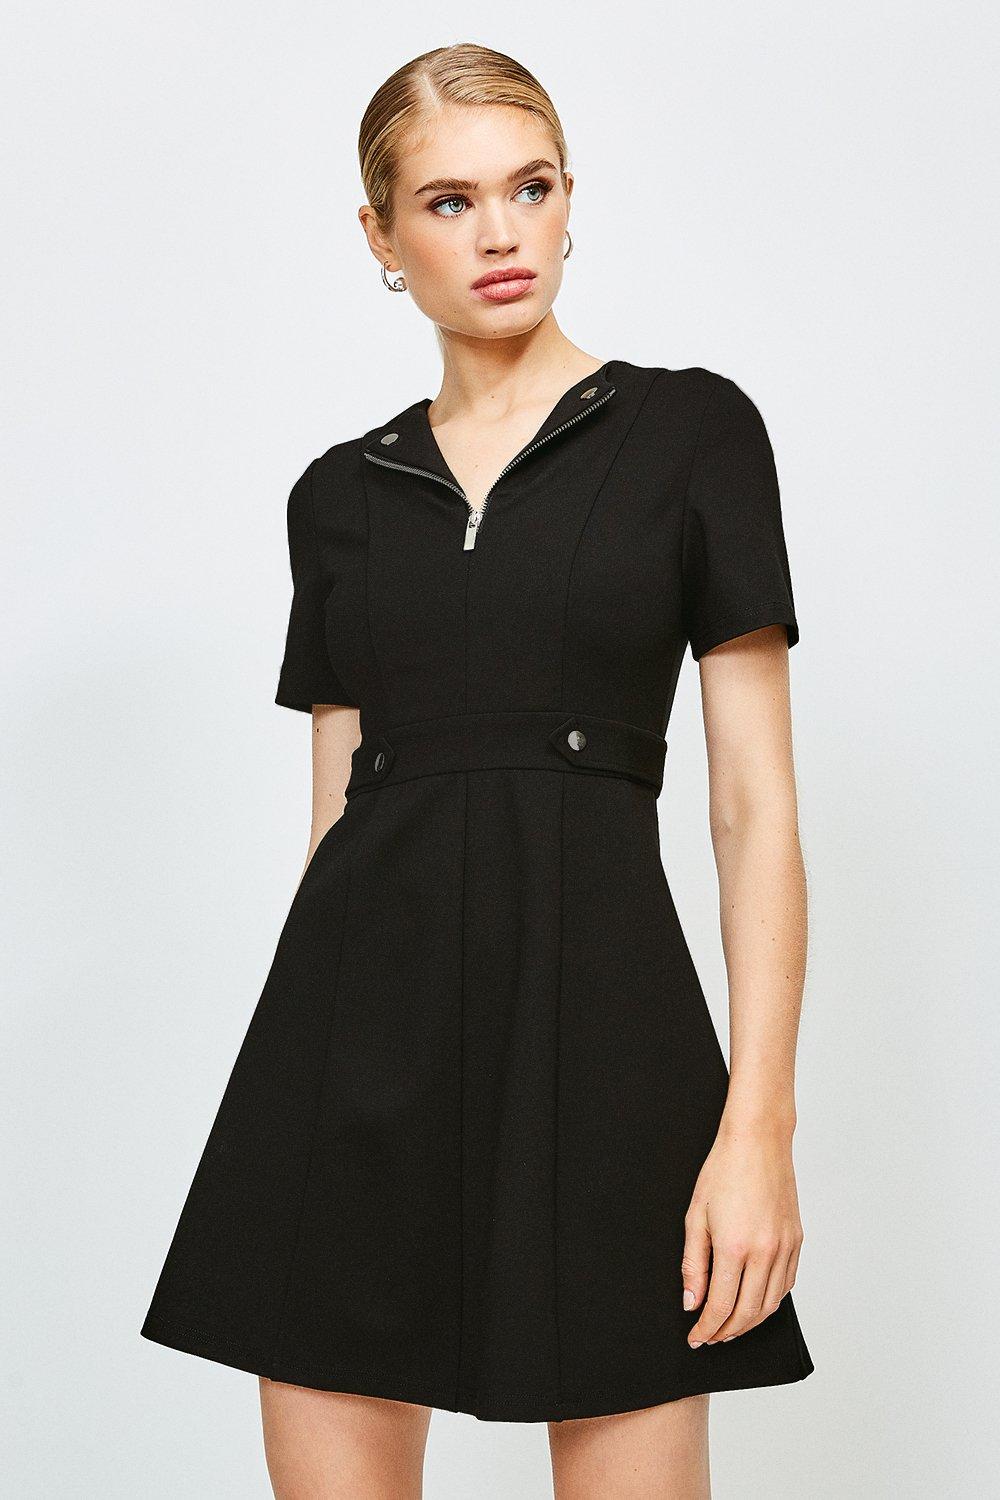 black zip up dress